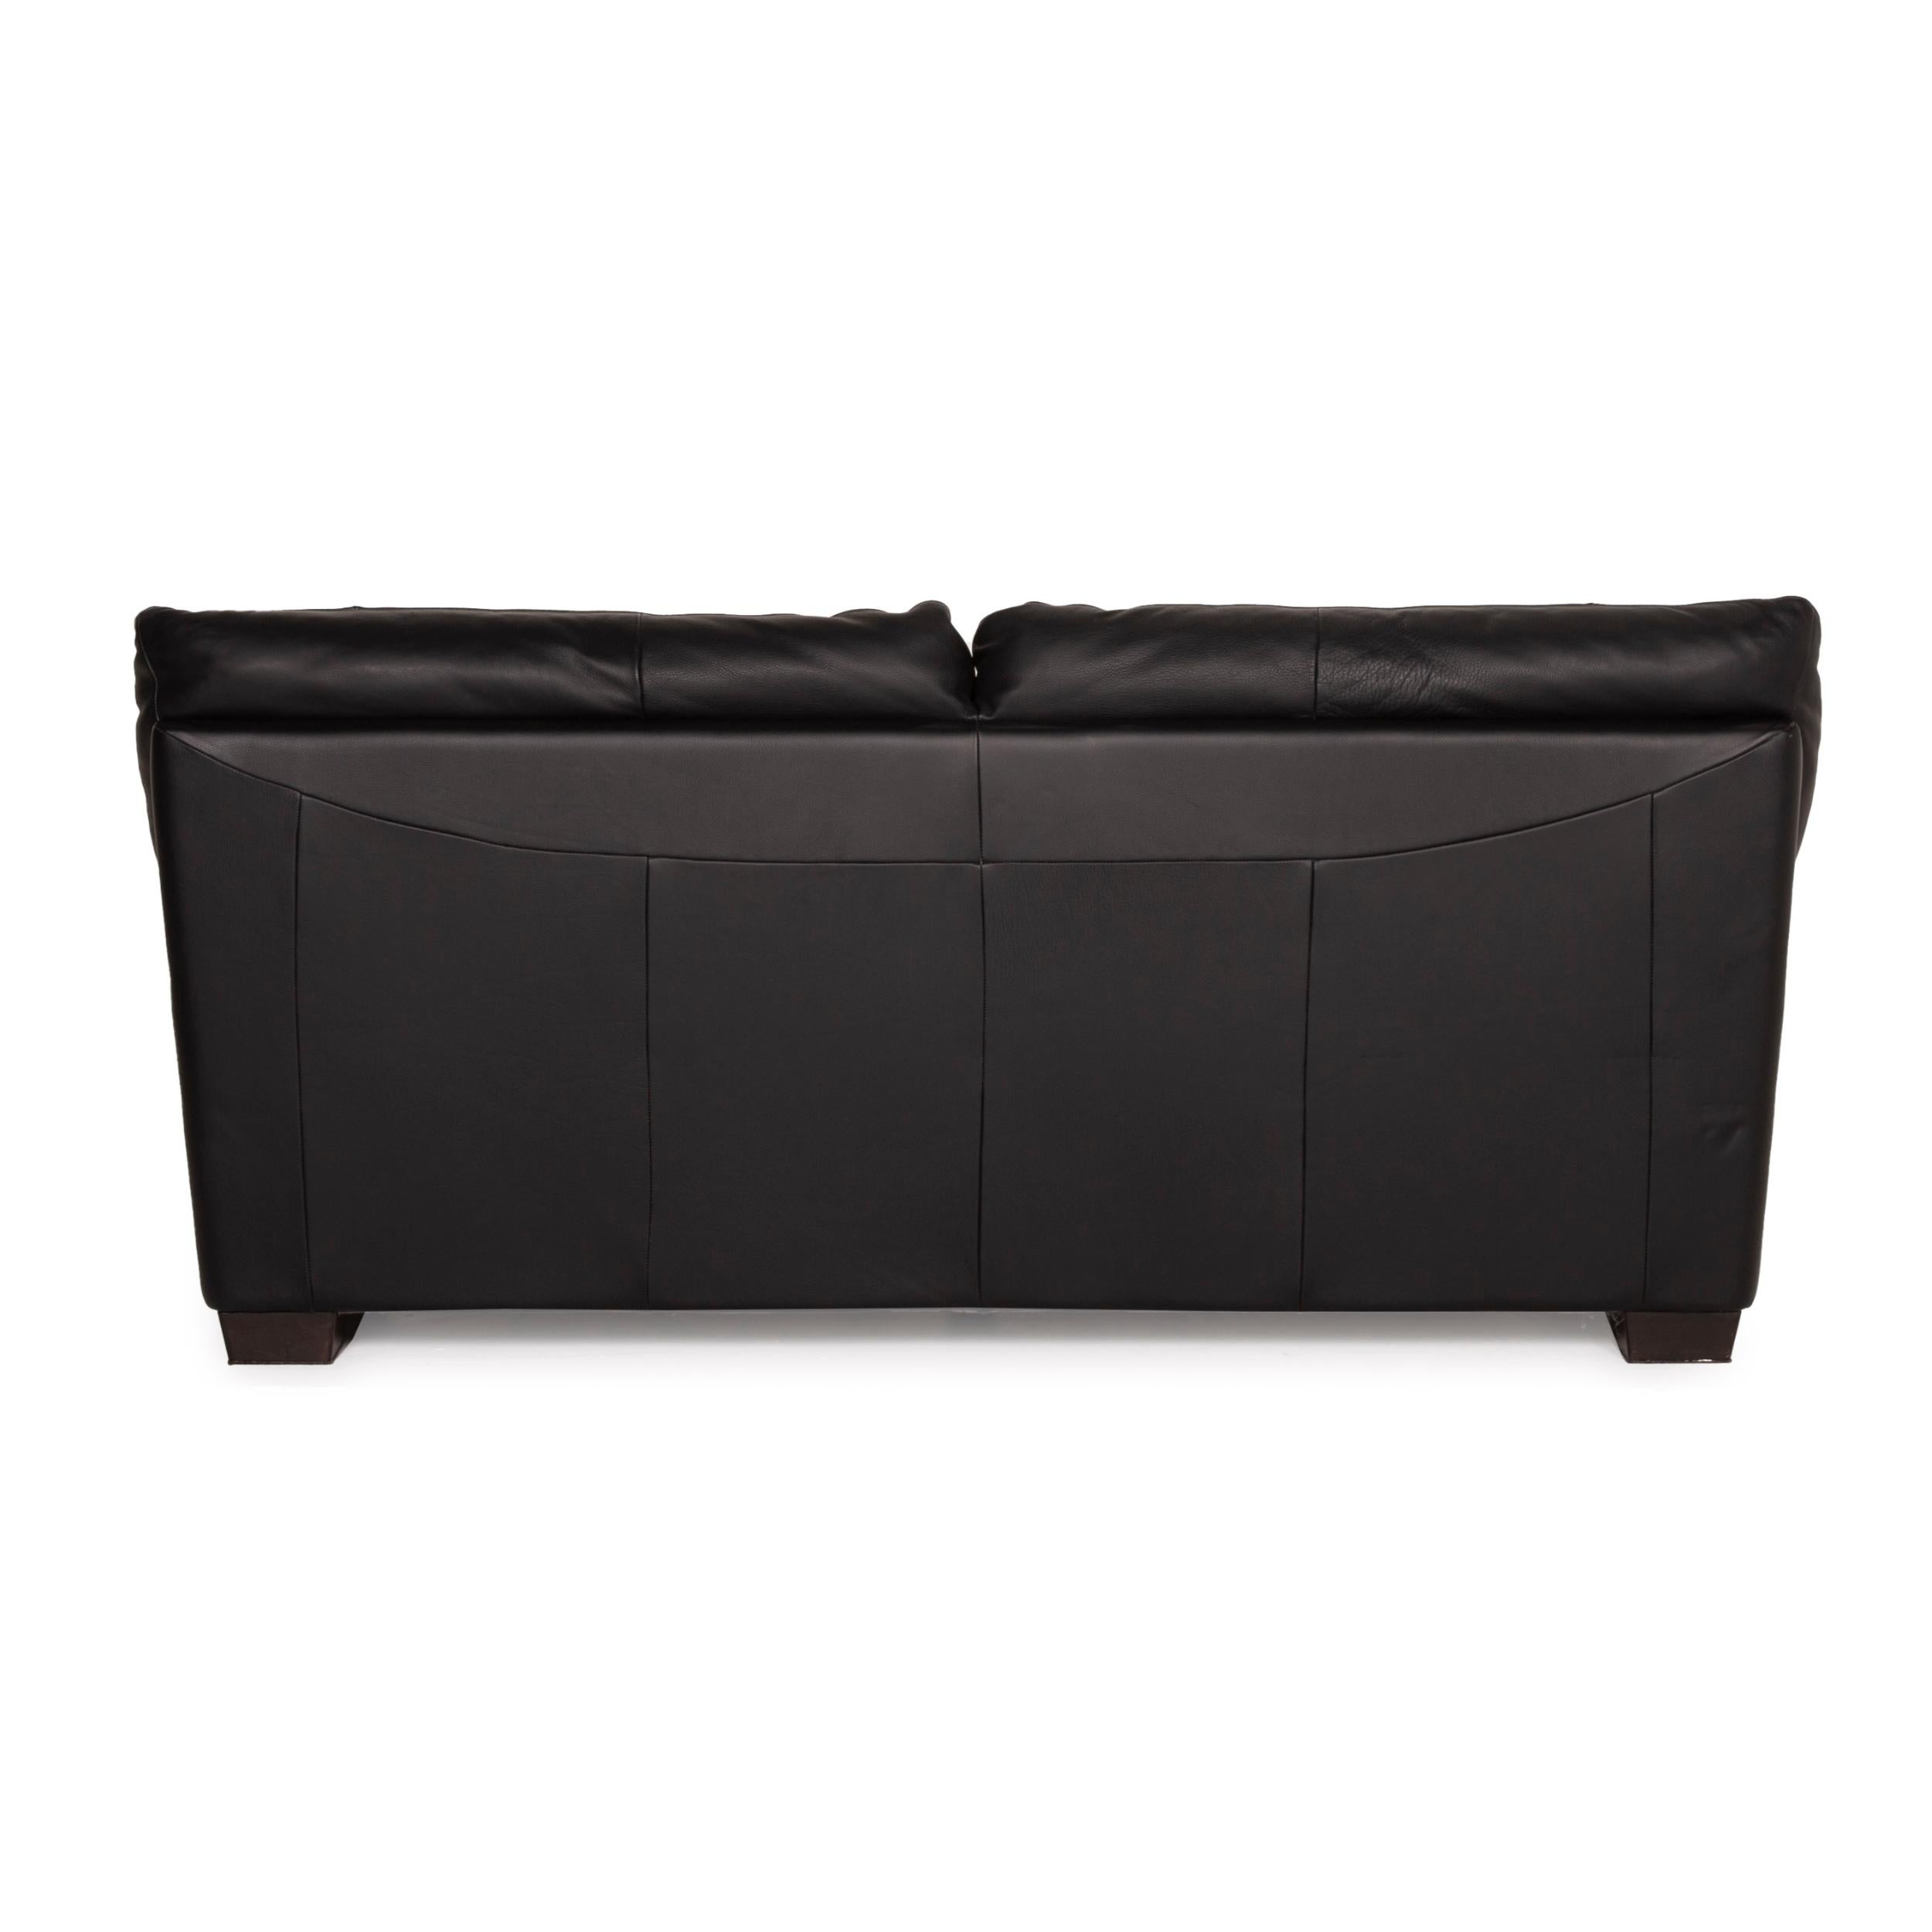 Natuzzi Two-Seater Leather Sofa Black 1